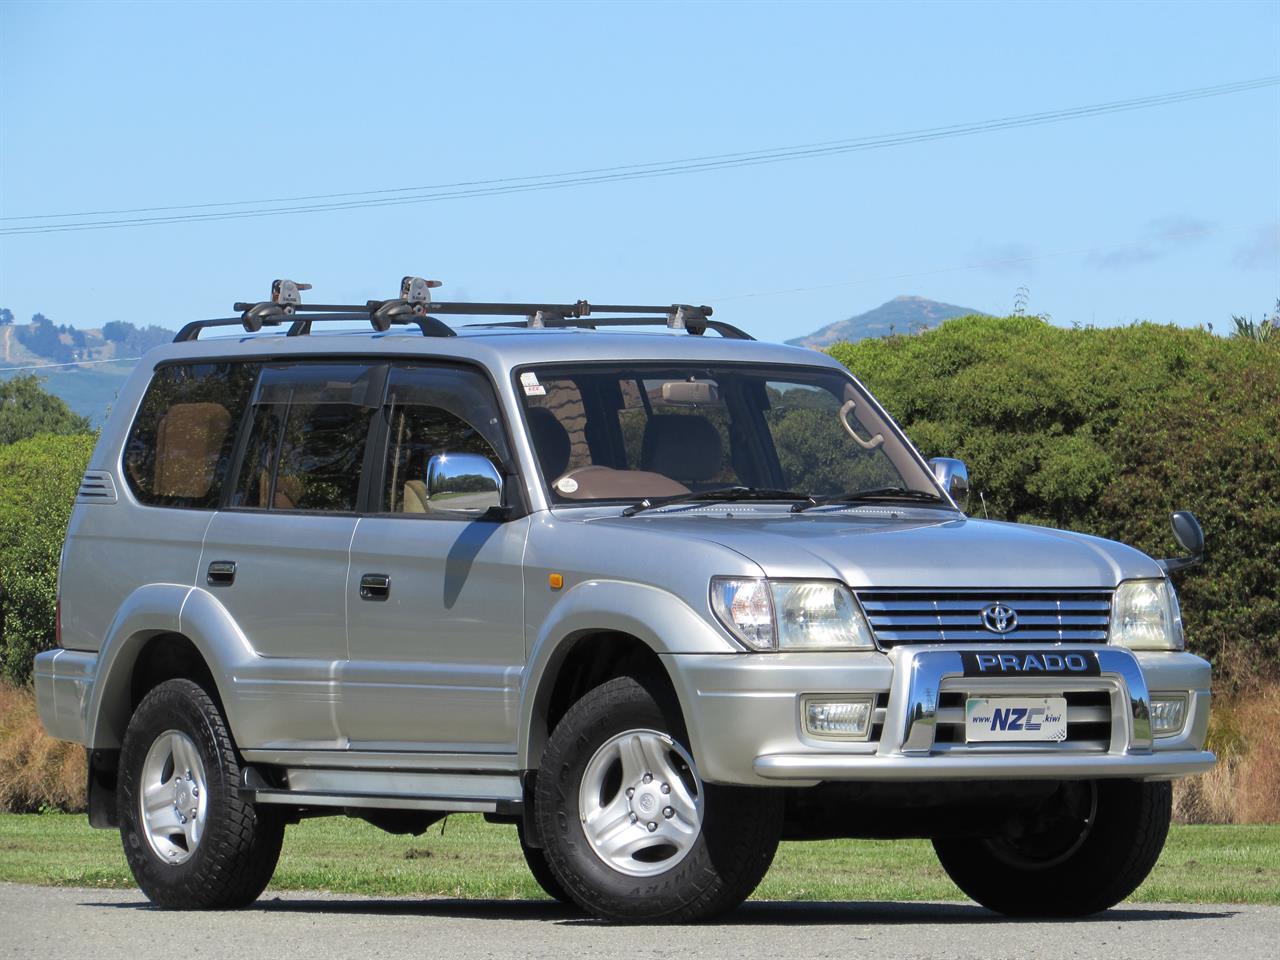 NZC best hot price for 2001 Toyota Land Cruiser Prado in Christchurch